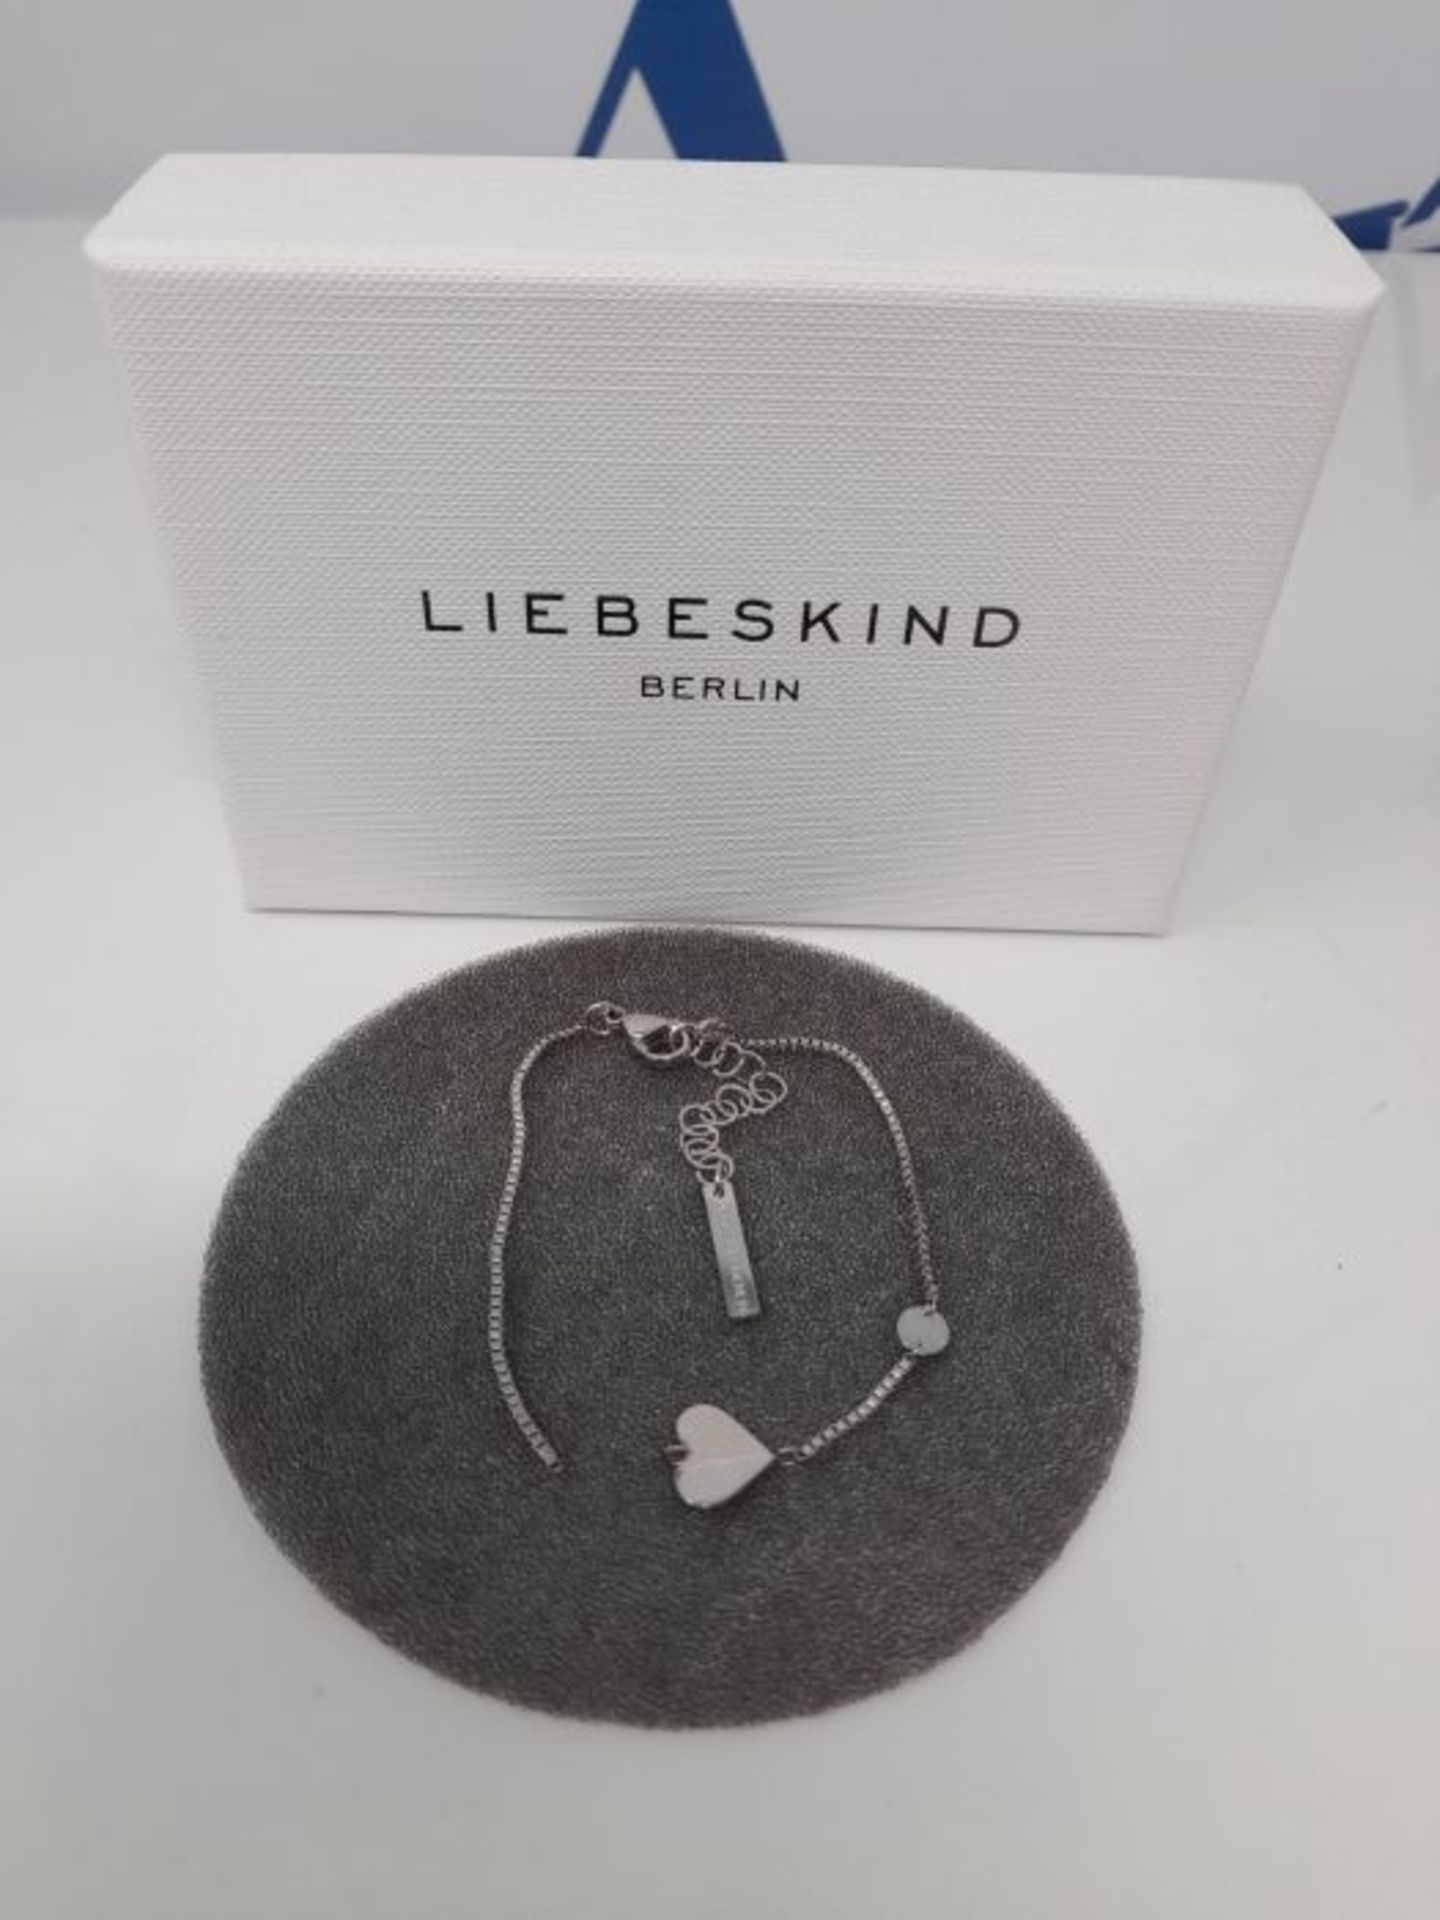 Liebeskind Berlin Bracelet, 20 cm, Stainless Steel, No gemstone., - Image 5 of 6